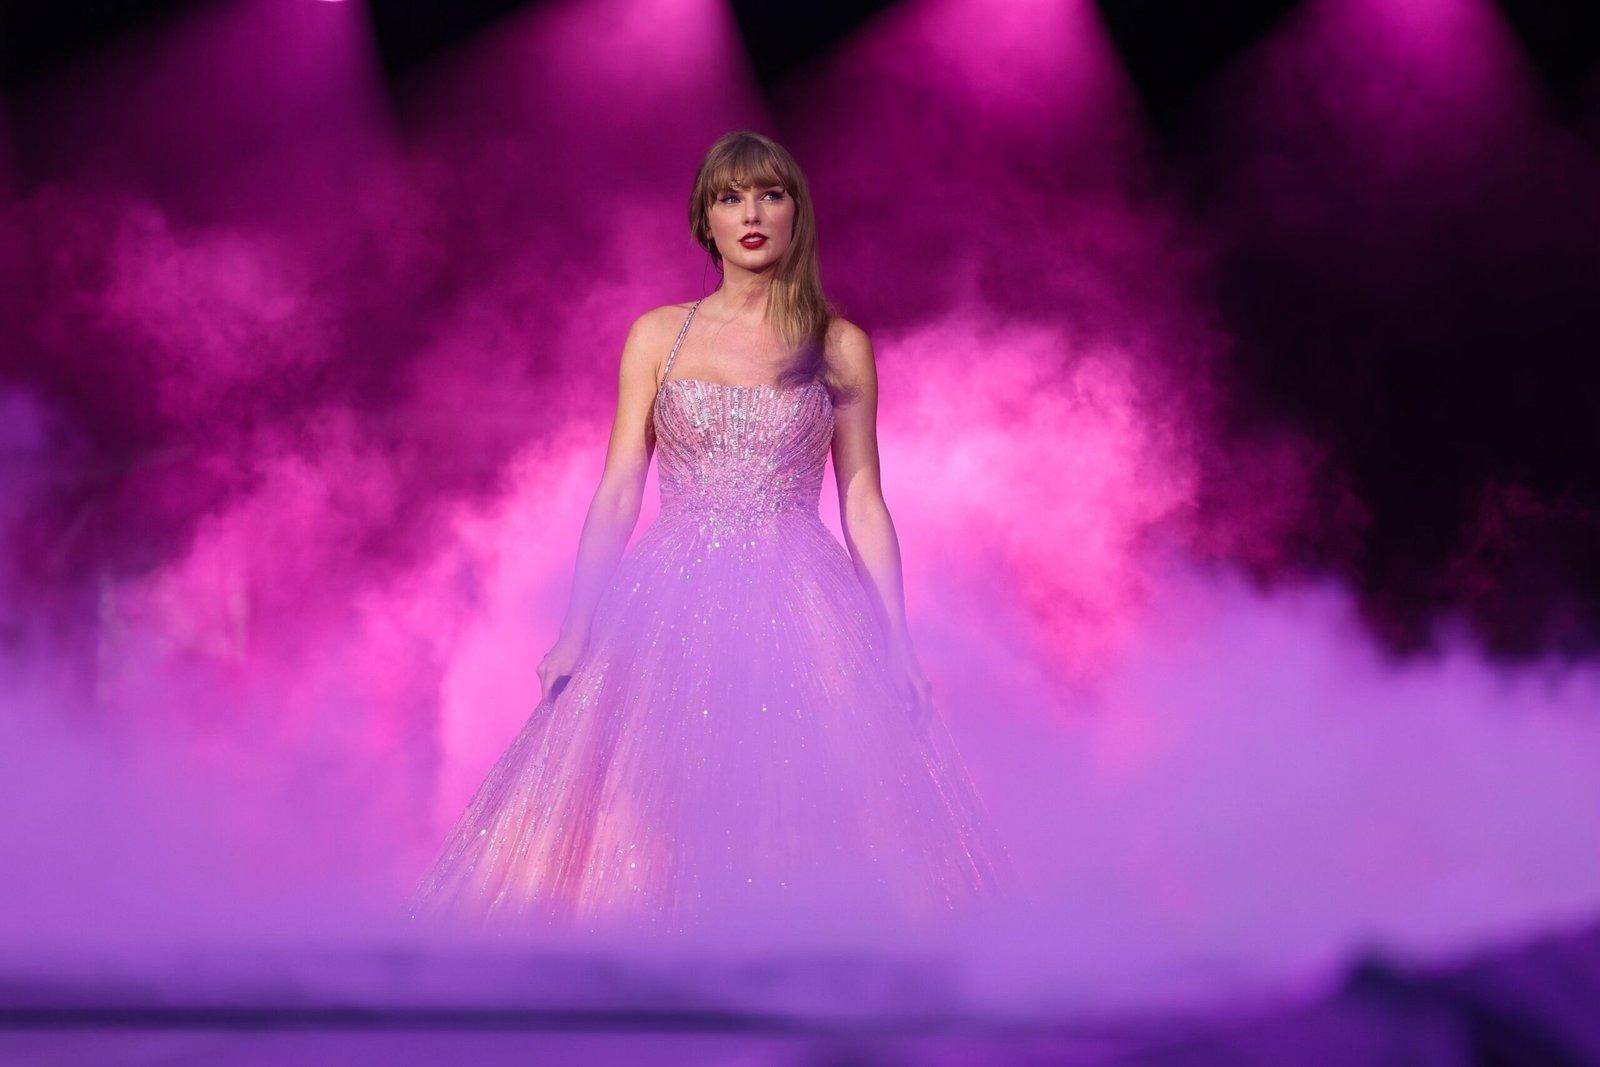 Lirik Lagu Enchanted – Taylor Swift